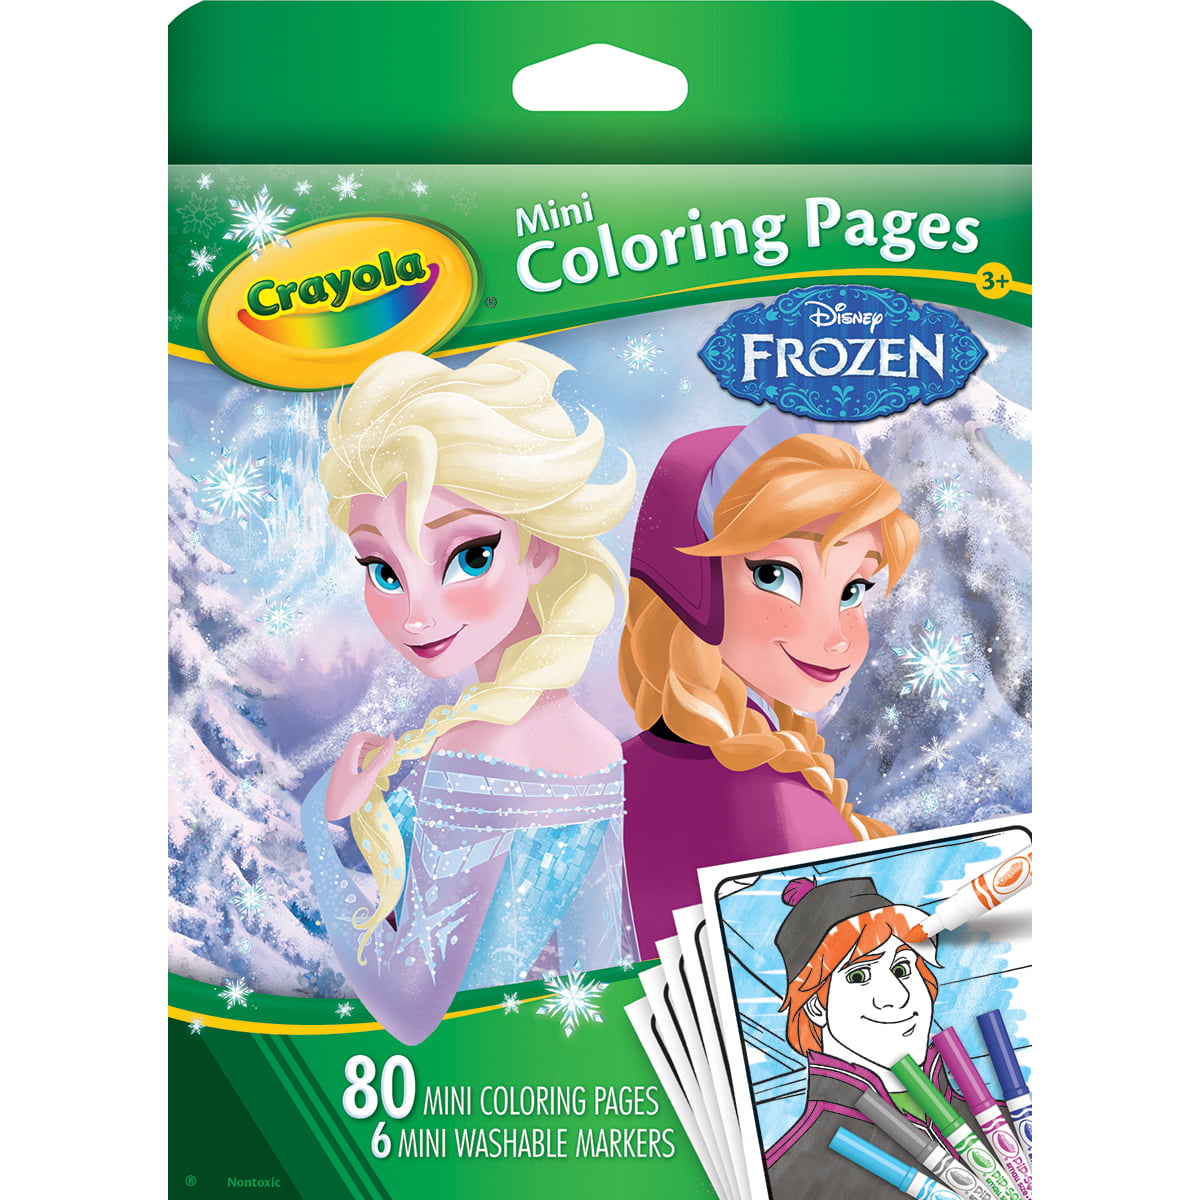 Frozen Color and Sticker Activity Set, Crayola.com